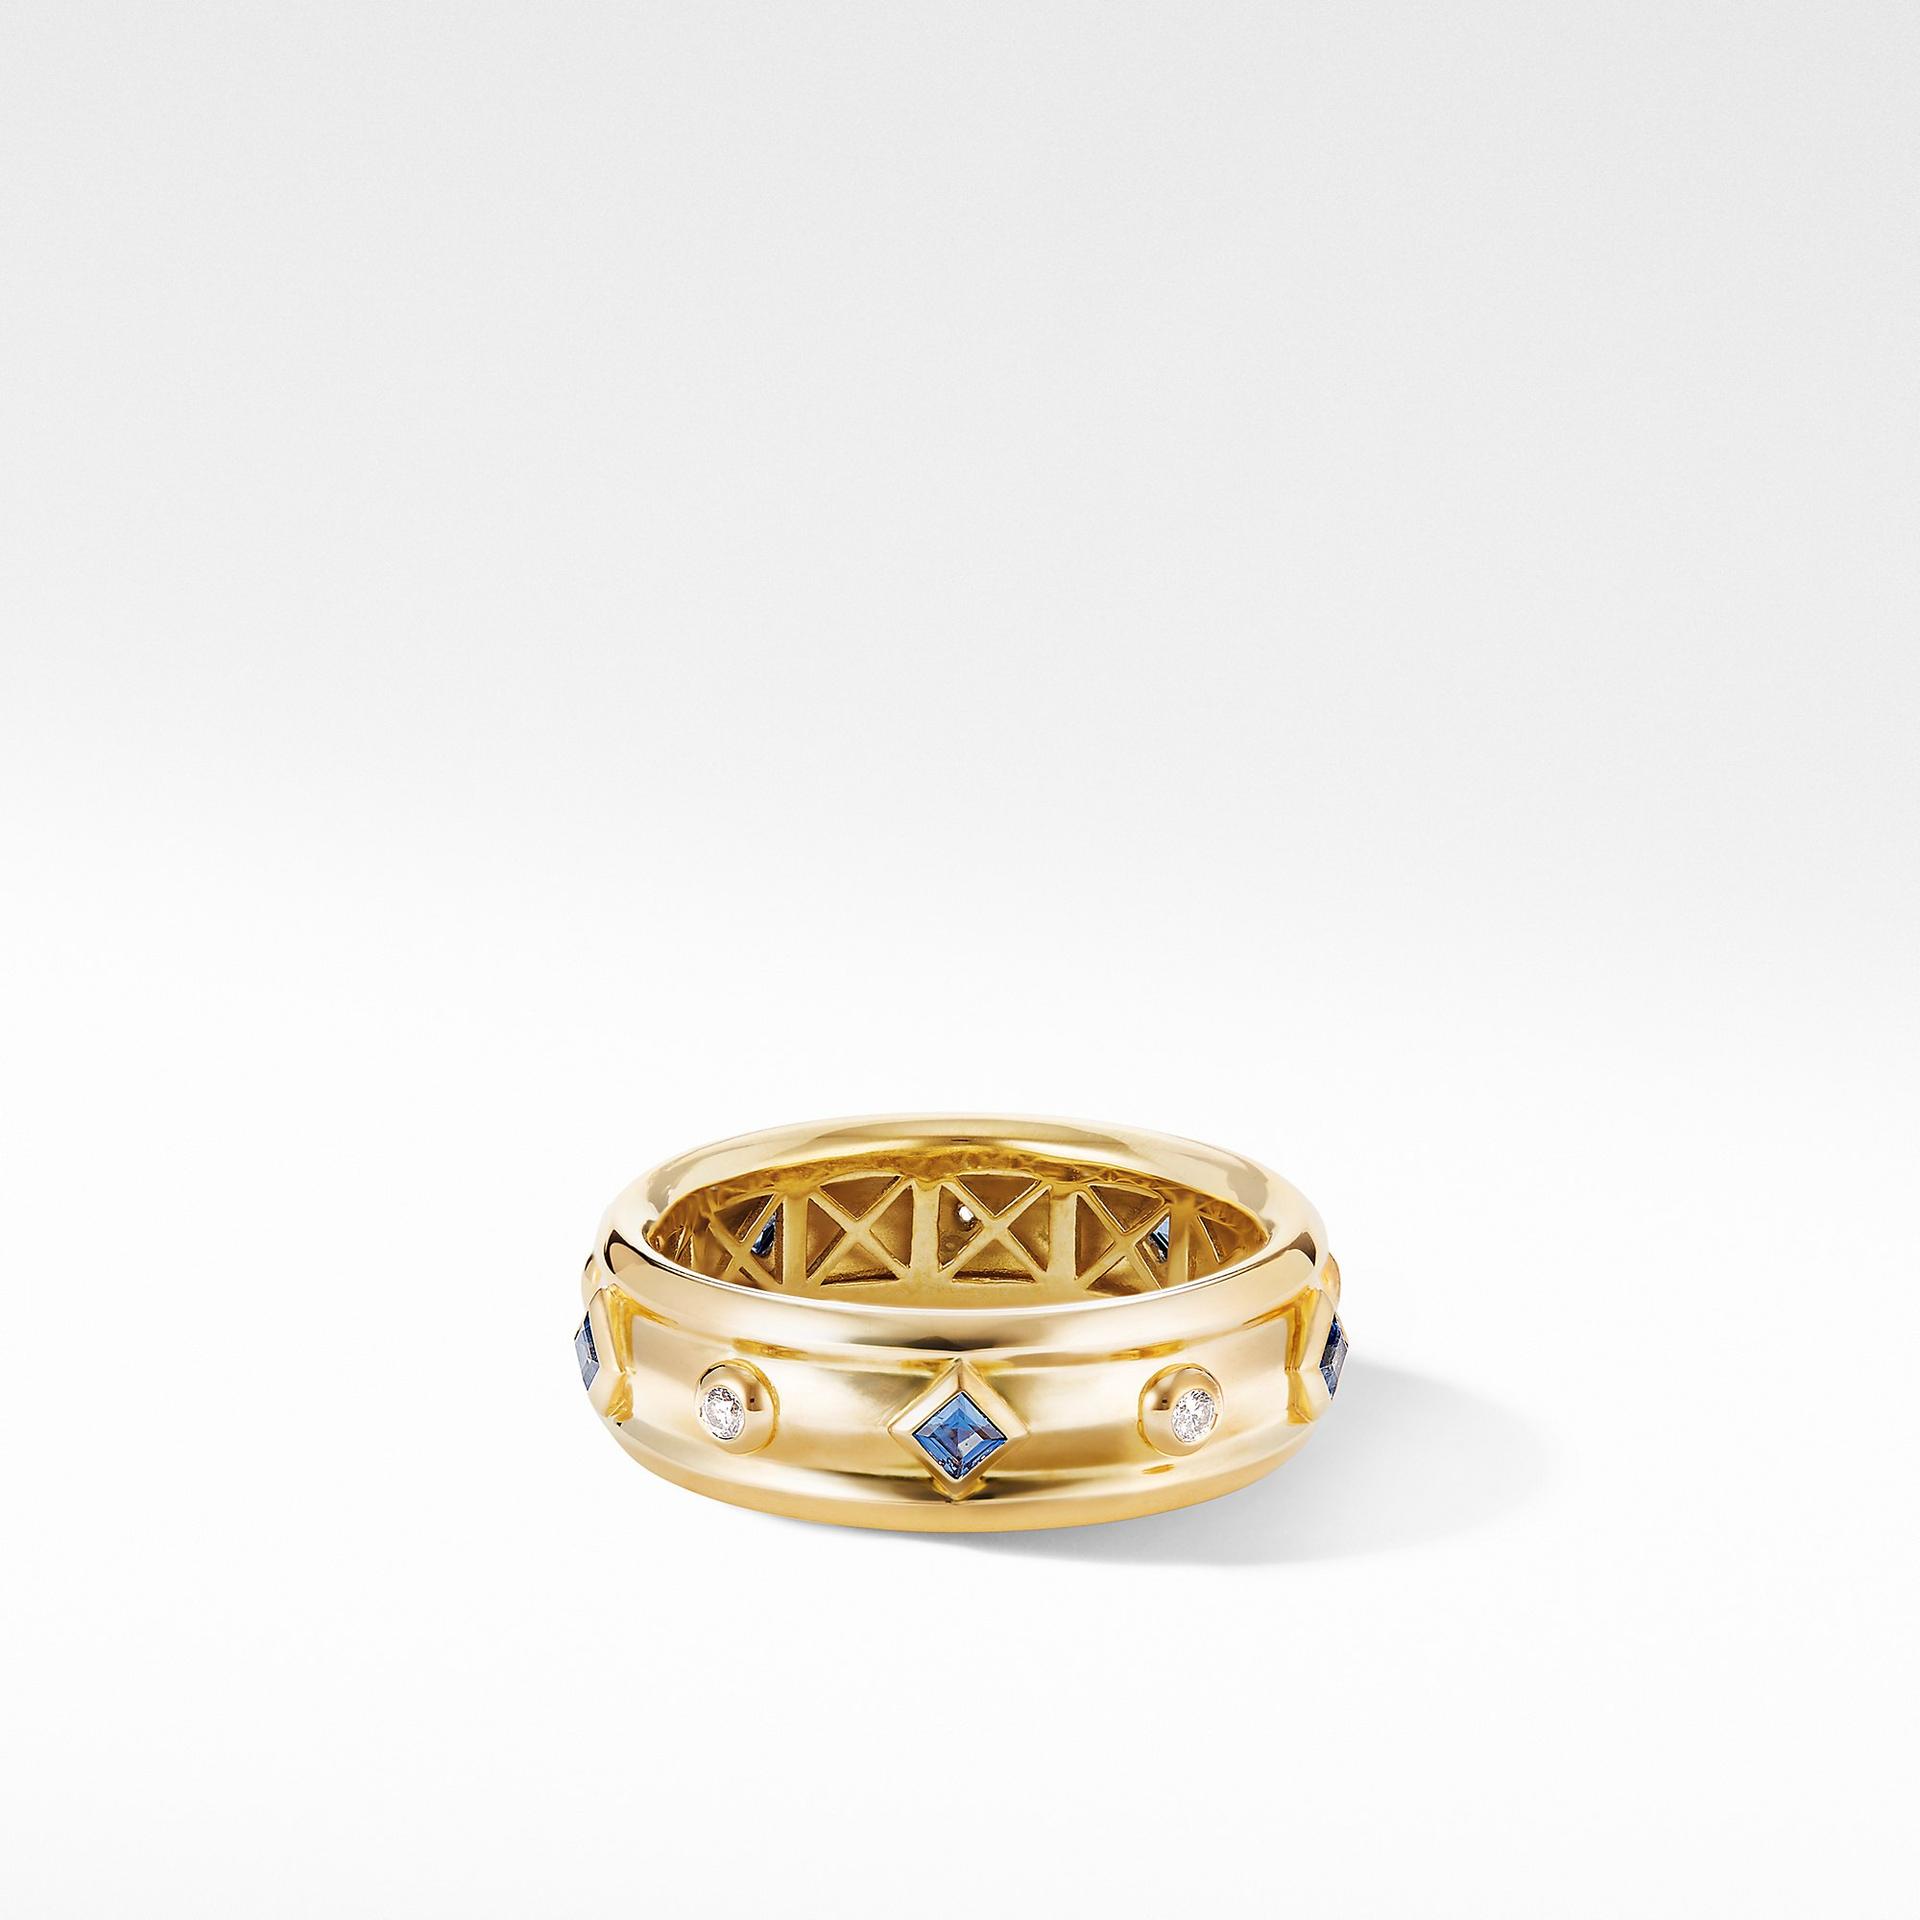 David Yurman Modern Renaissance Ring in 18K Yellow Gold with Blue Sapphires and Diamonds 0